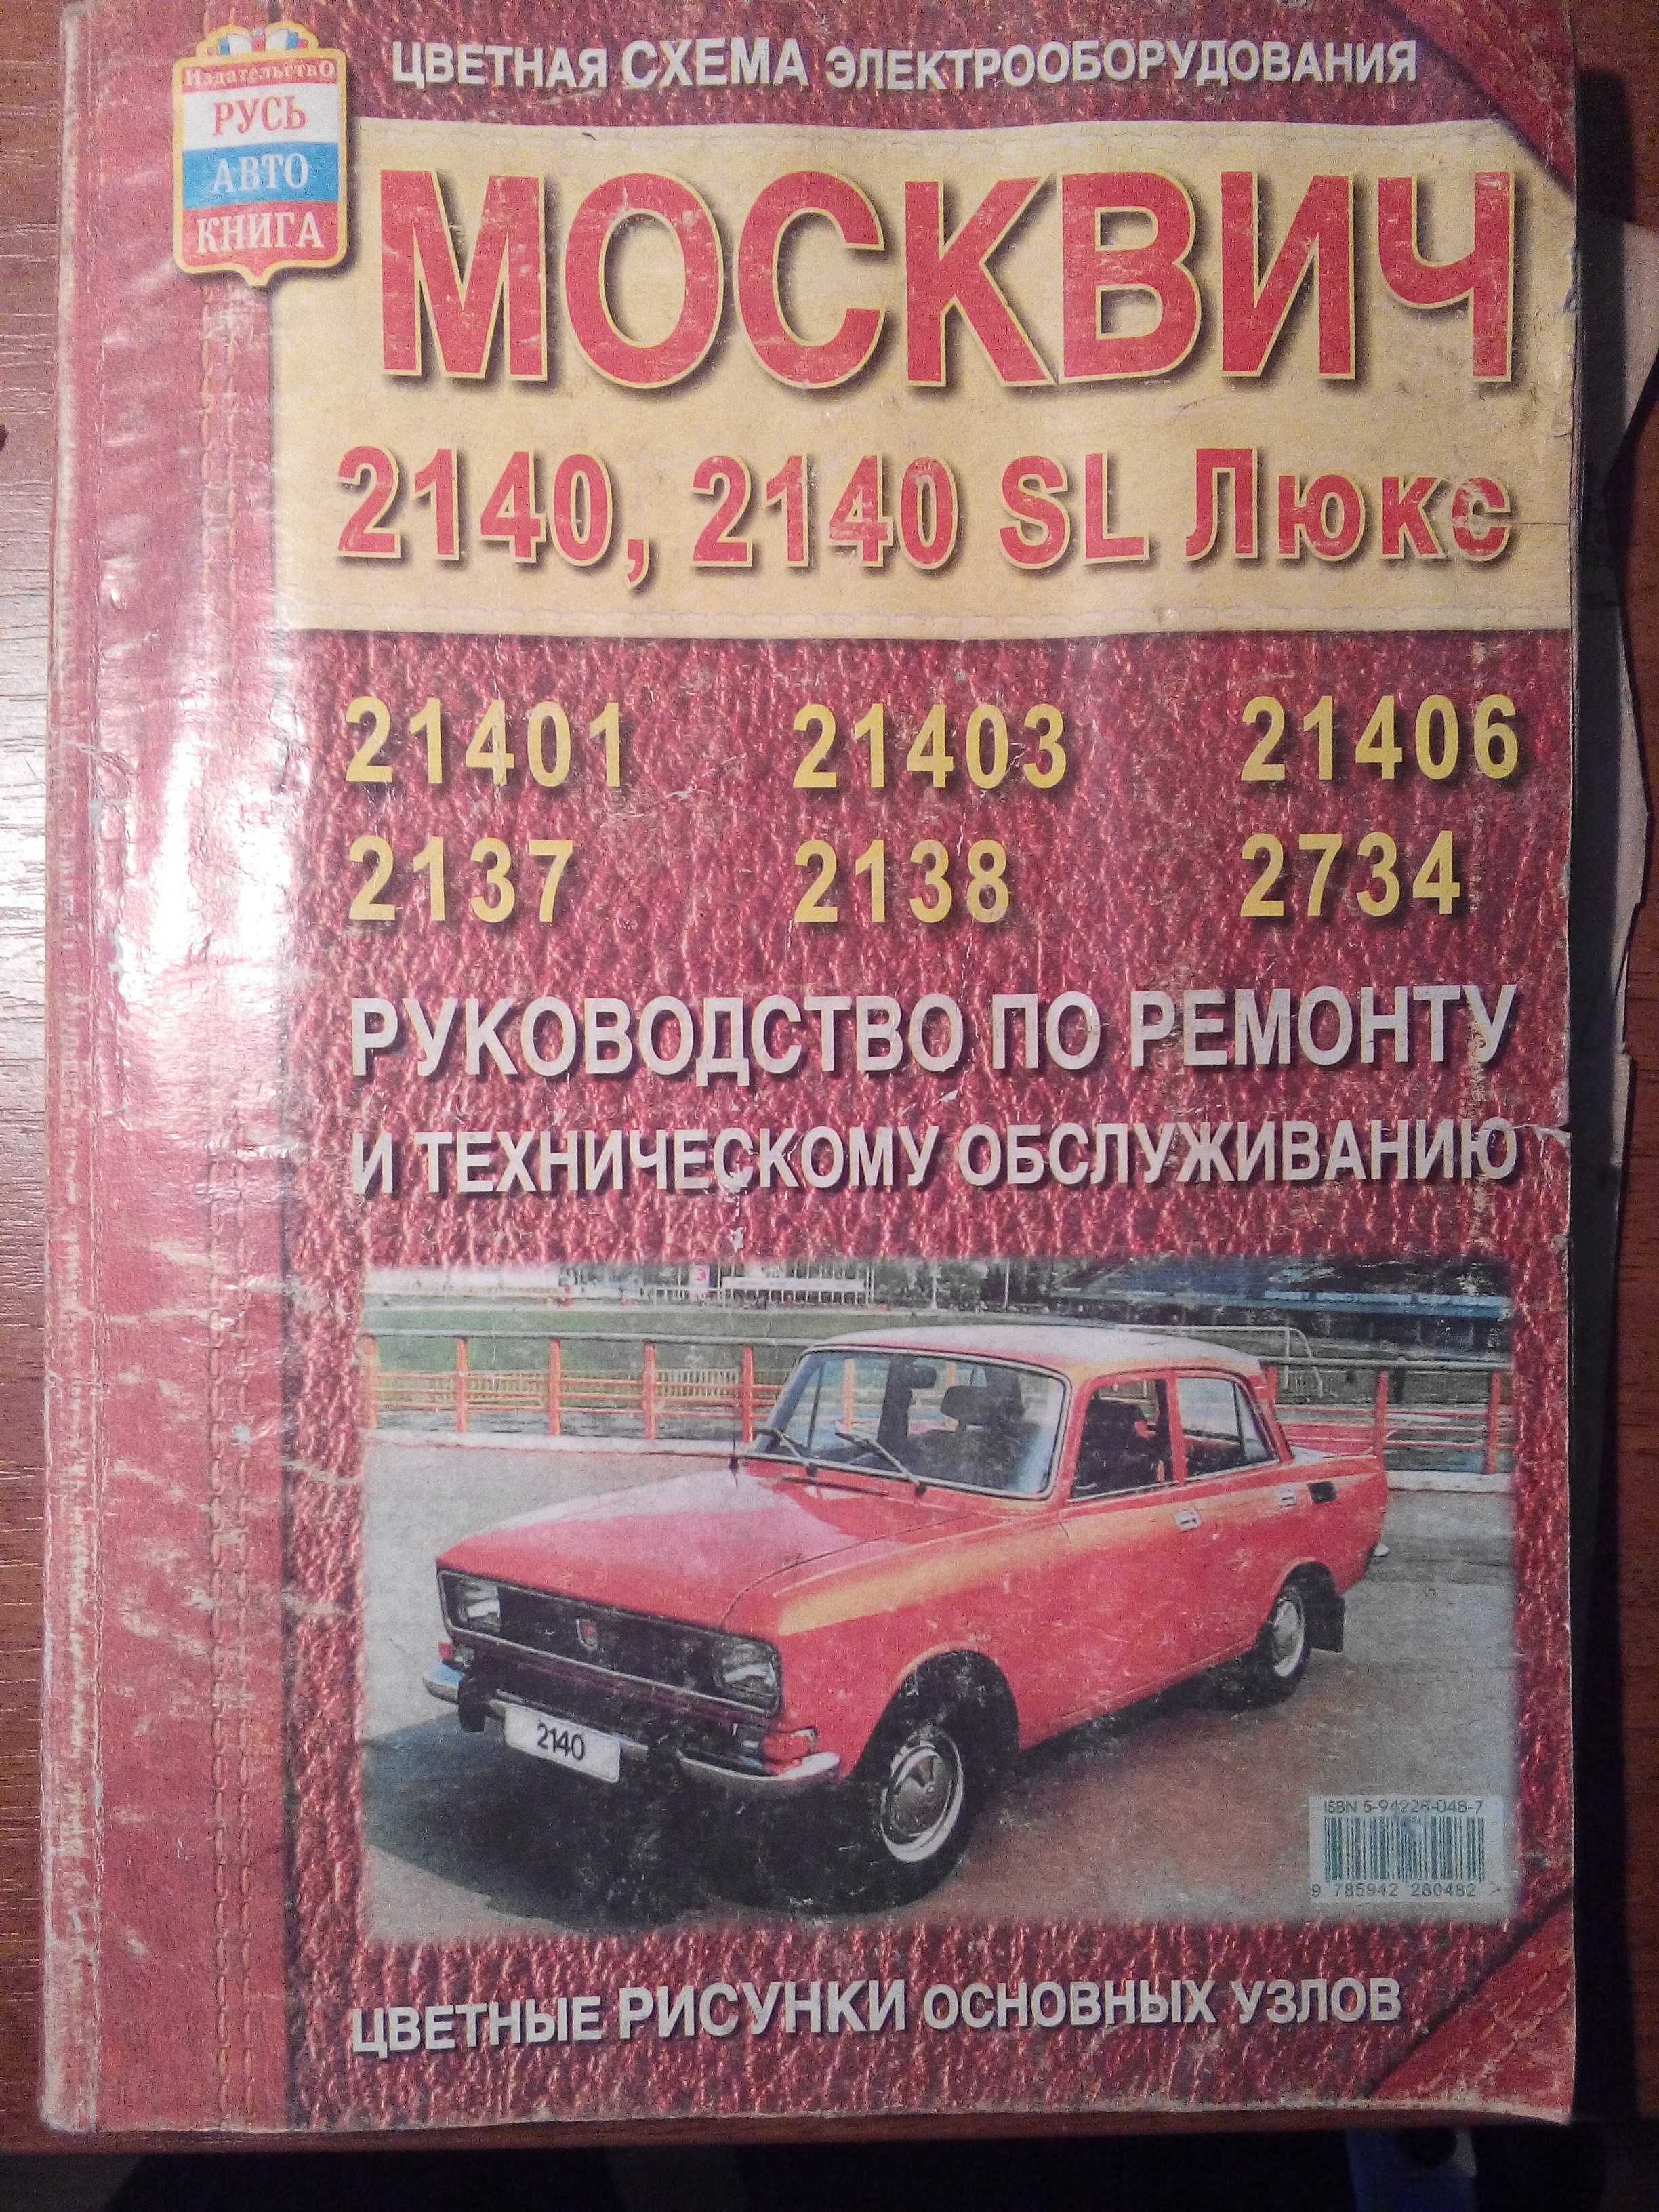 Москвич 408-2140: молдинг и прочее по кузову, агрегатам и салону